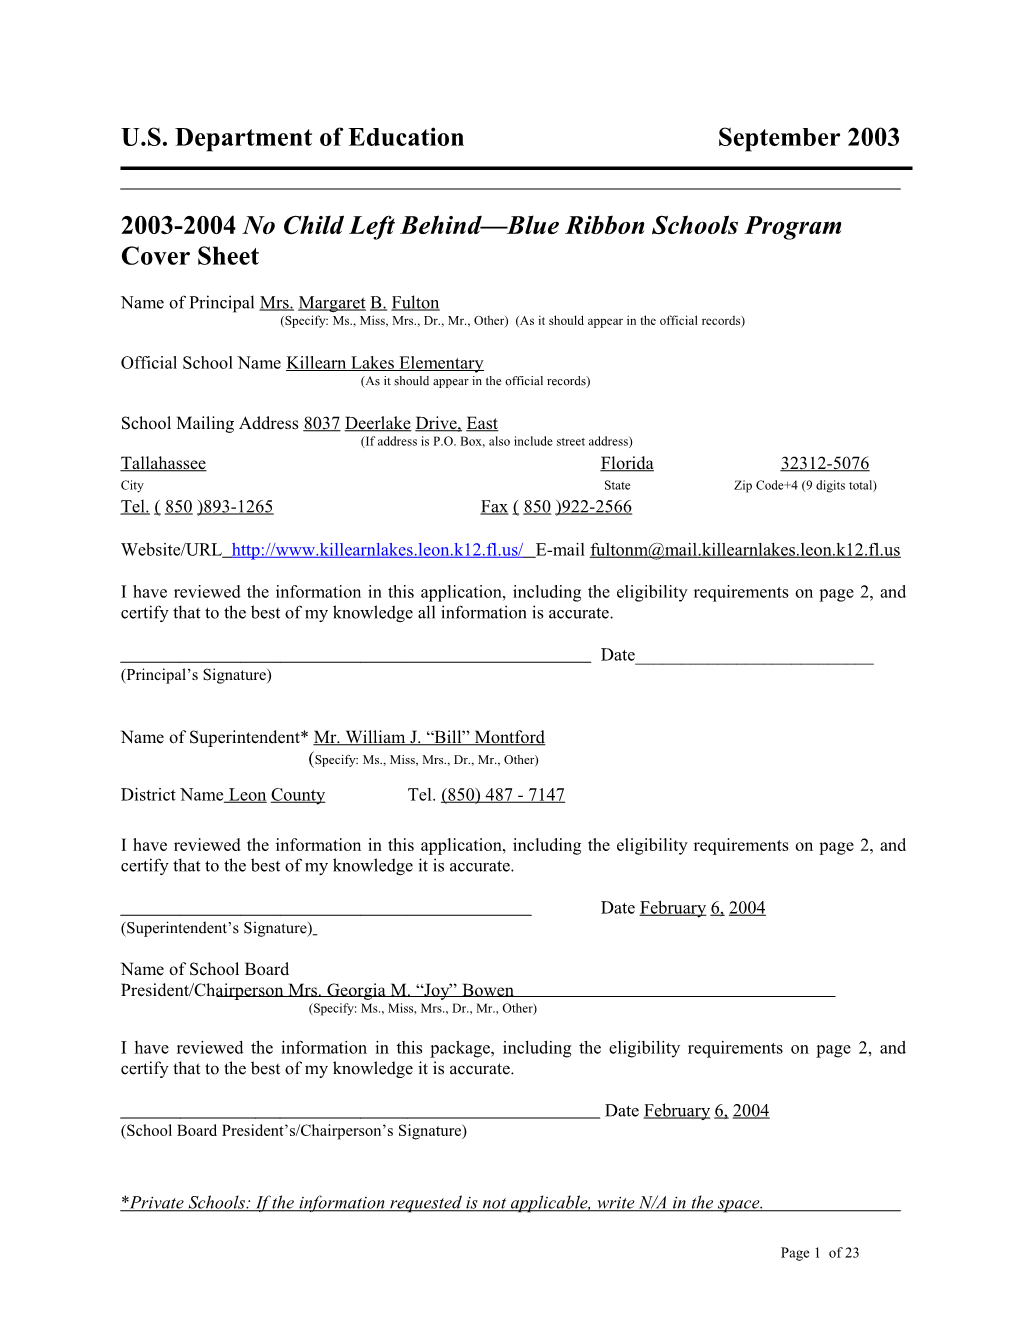 Killearn Lakes Elementary School 2004 No Child Left Behind-Blue Ribbon School Application